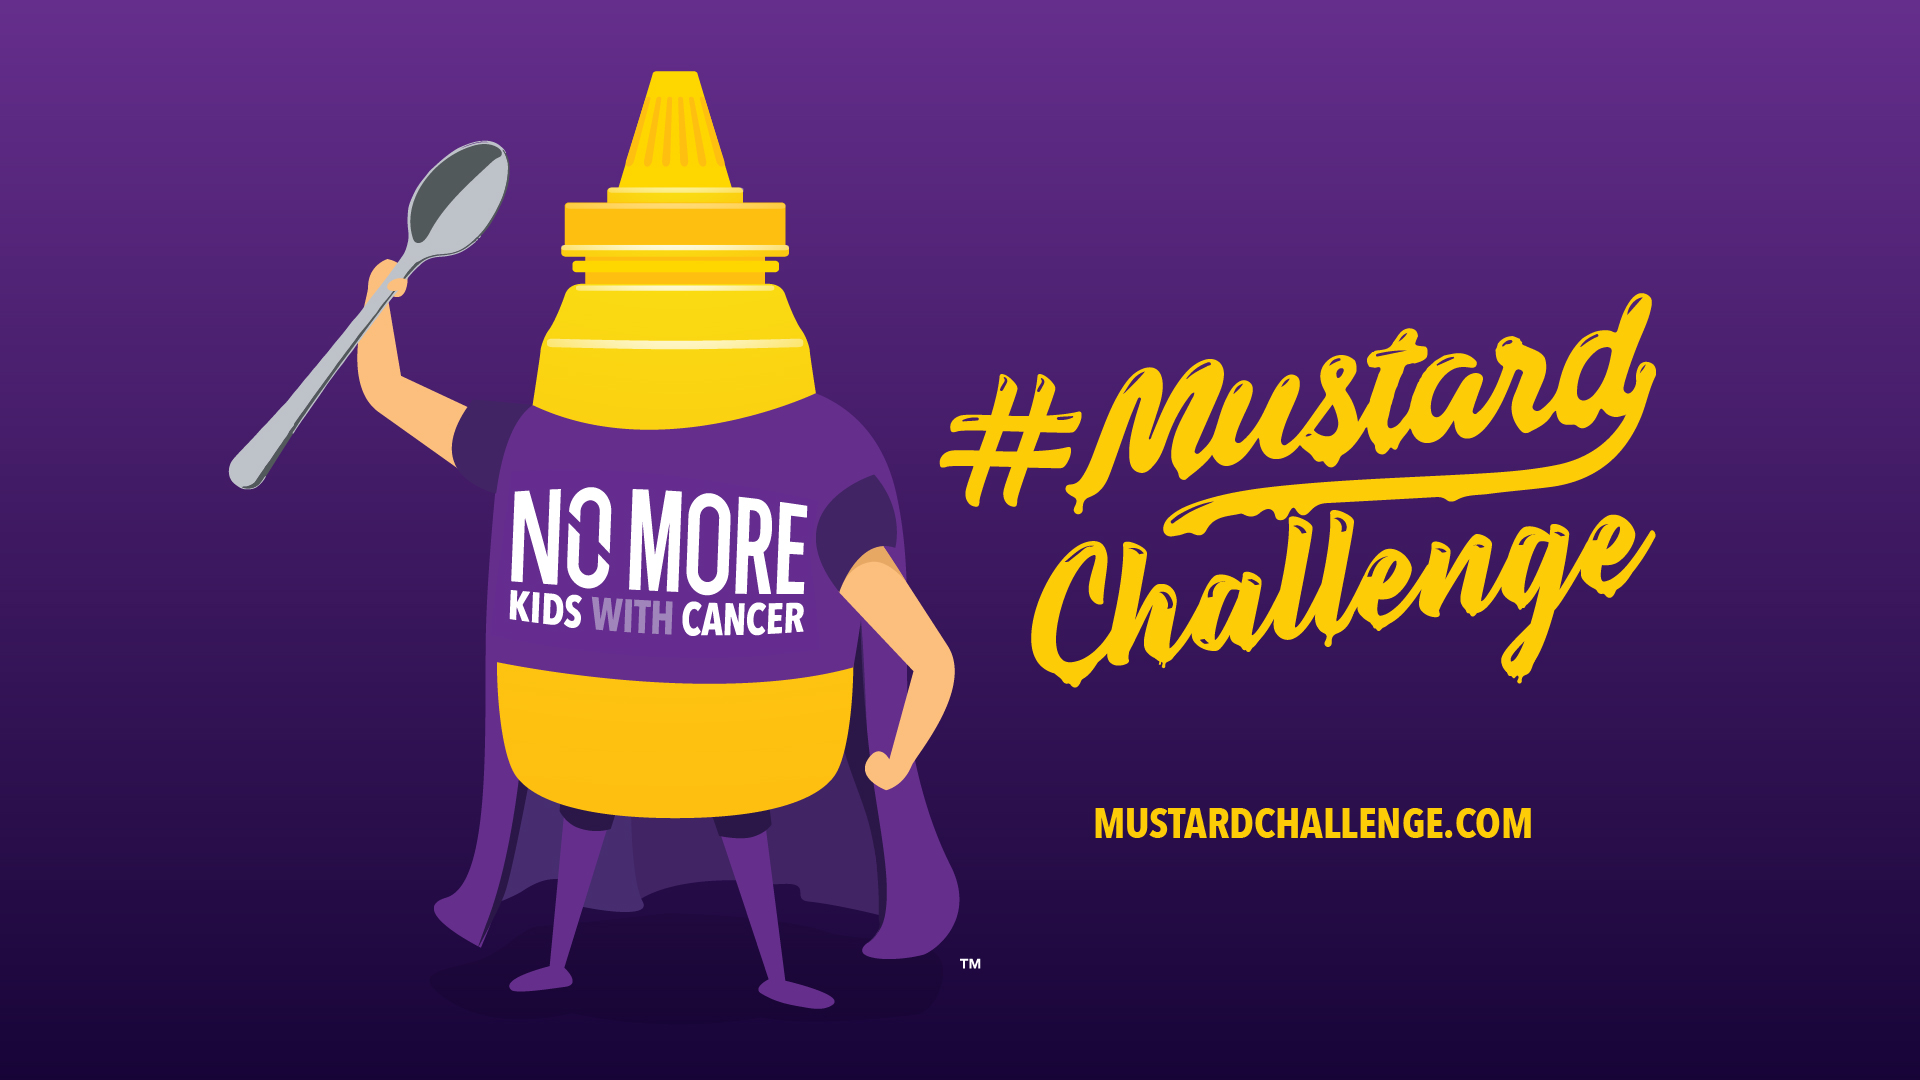 Mustard_Challenge_Logo_Url_PurpleGradBG.jpg